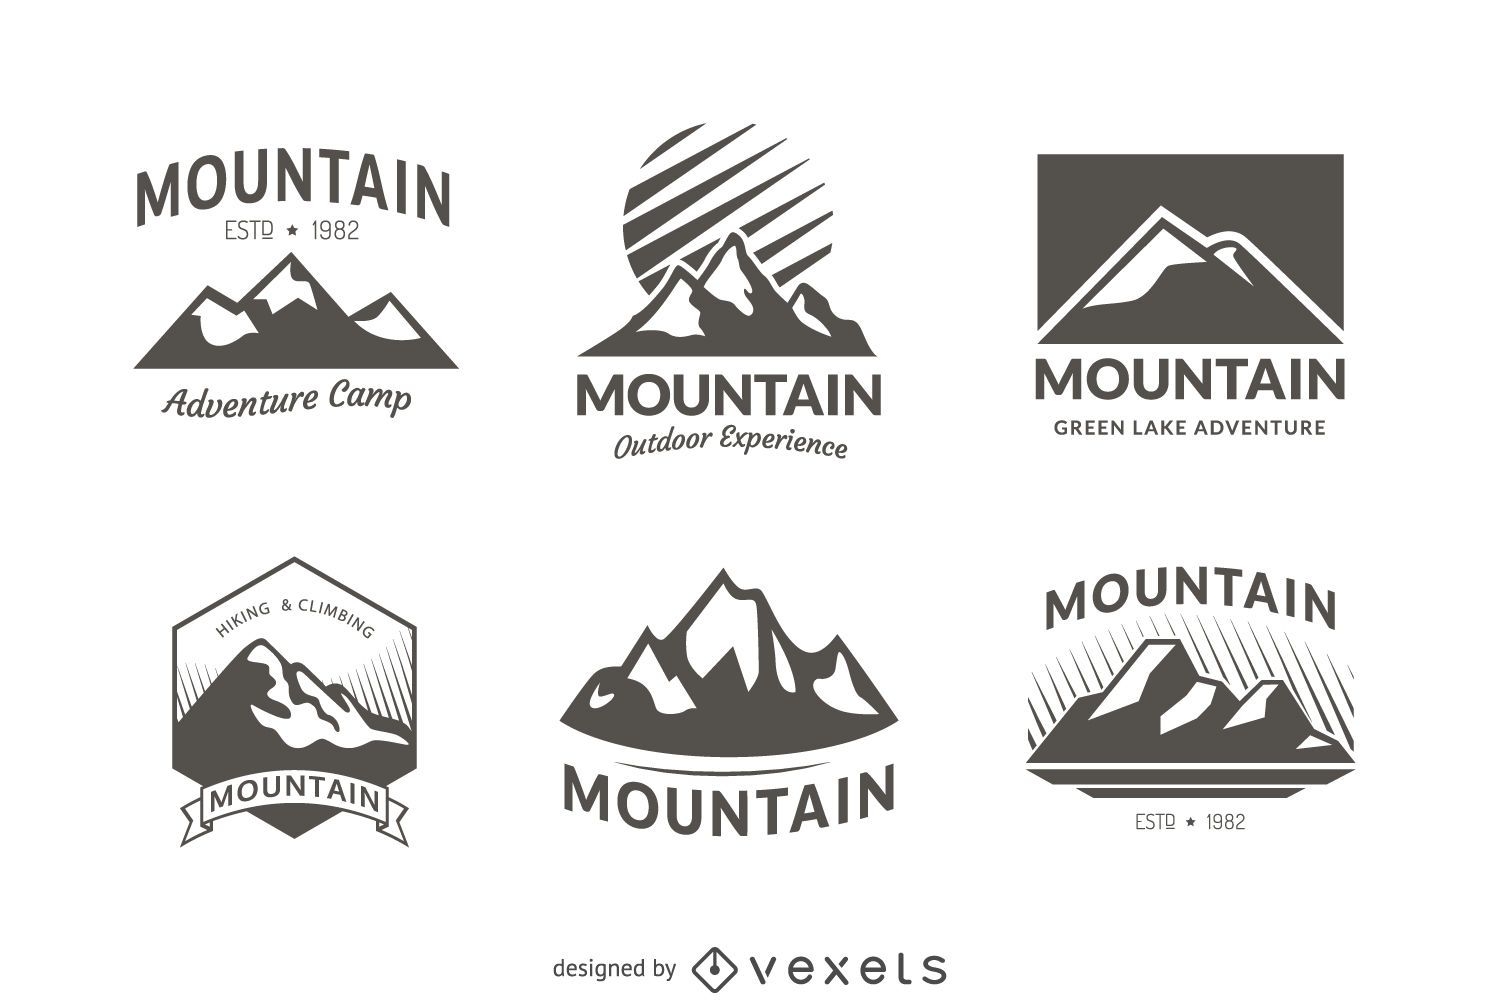 6 plantillas de logotipos de insignias de montaña